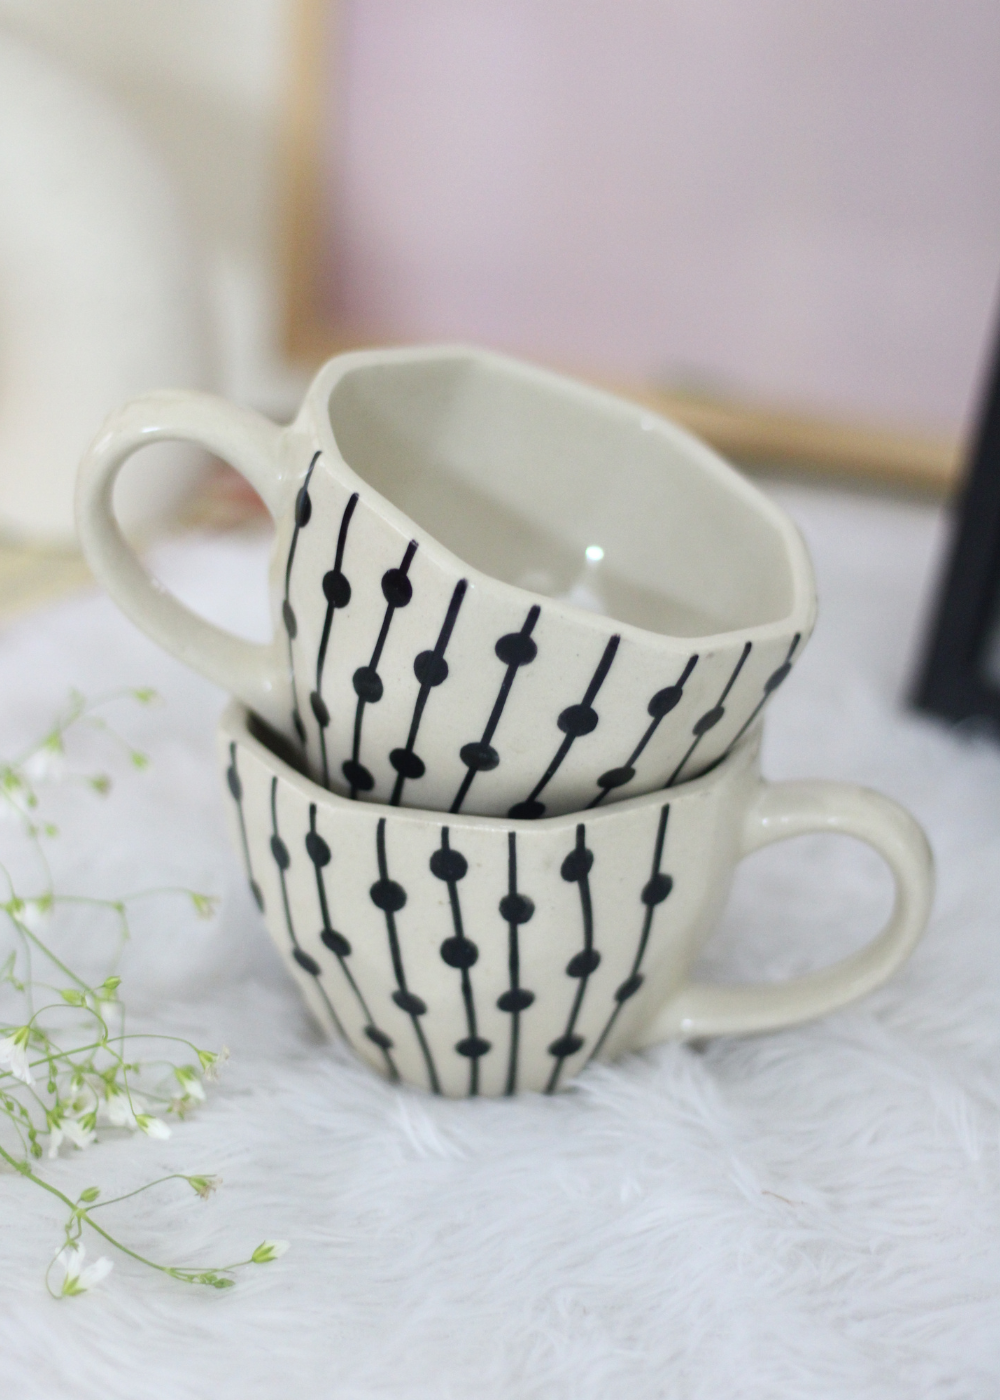 Handmade ceramic coffee mugs on each other